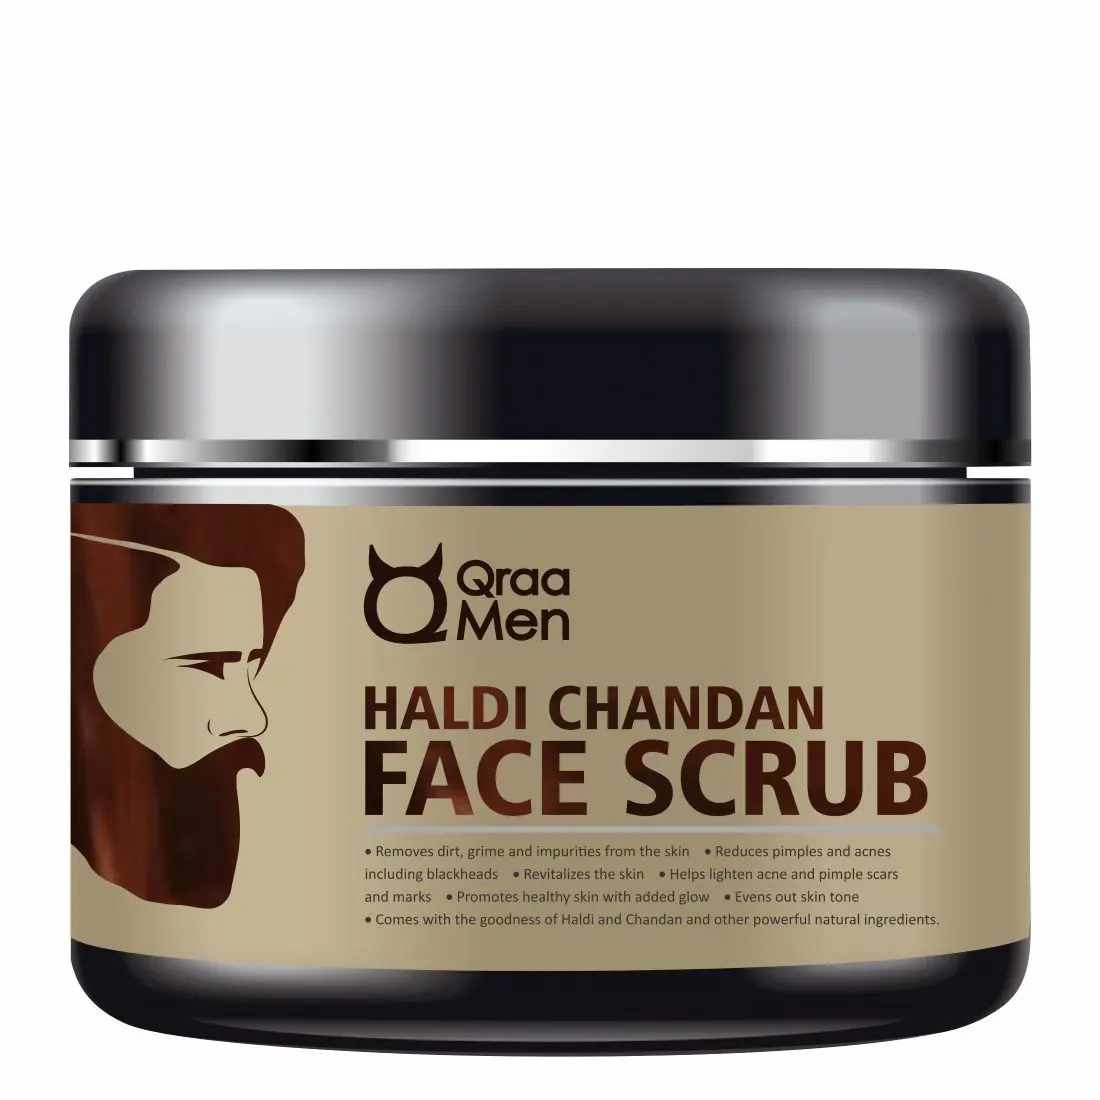 Qraa Men Haldi Chandan Face Scrub (100g) for Skin Brightening/Lightening with Turmeric Oil & Sandalwood